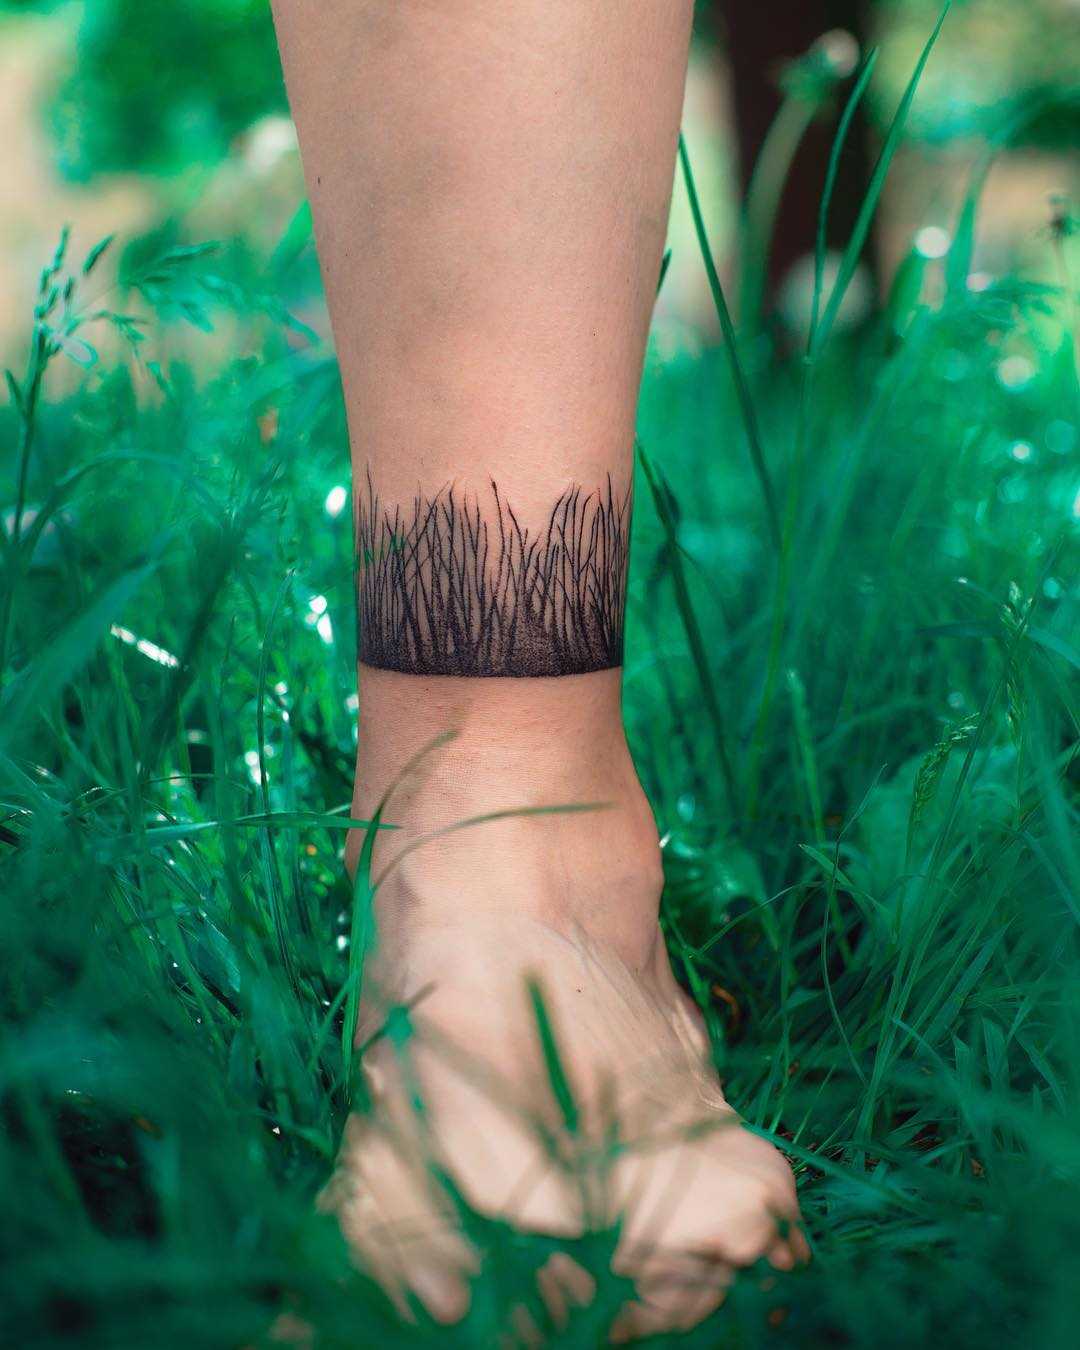 Grass around the ankle by Dżudi Bazgrole